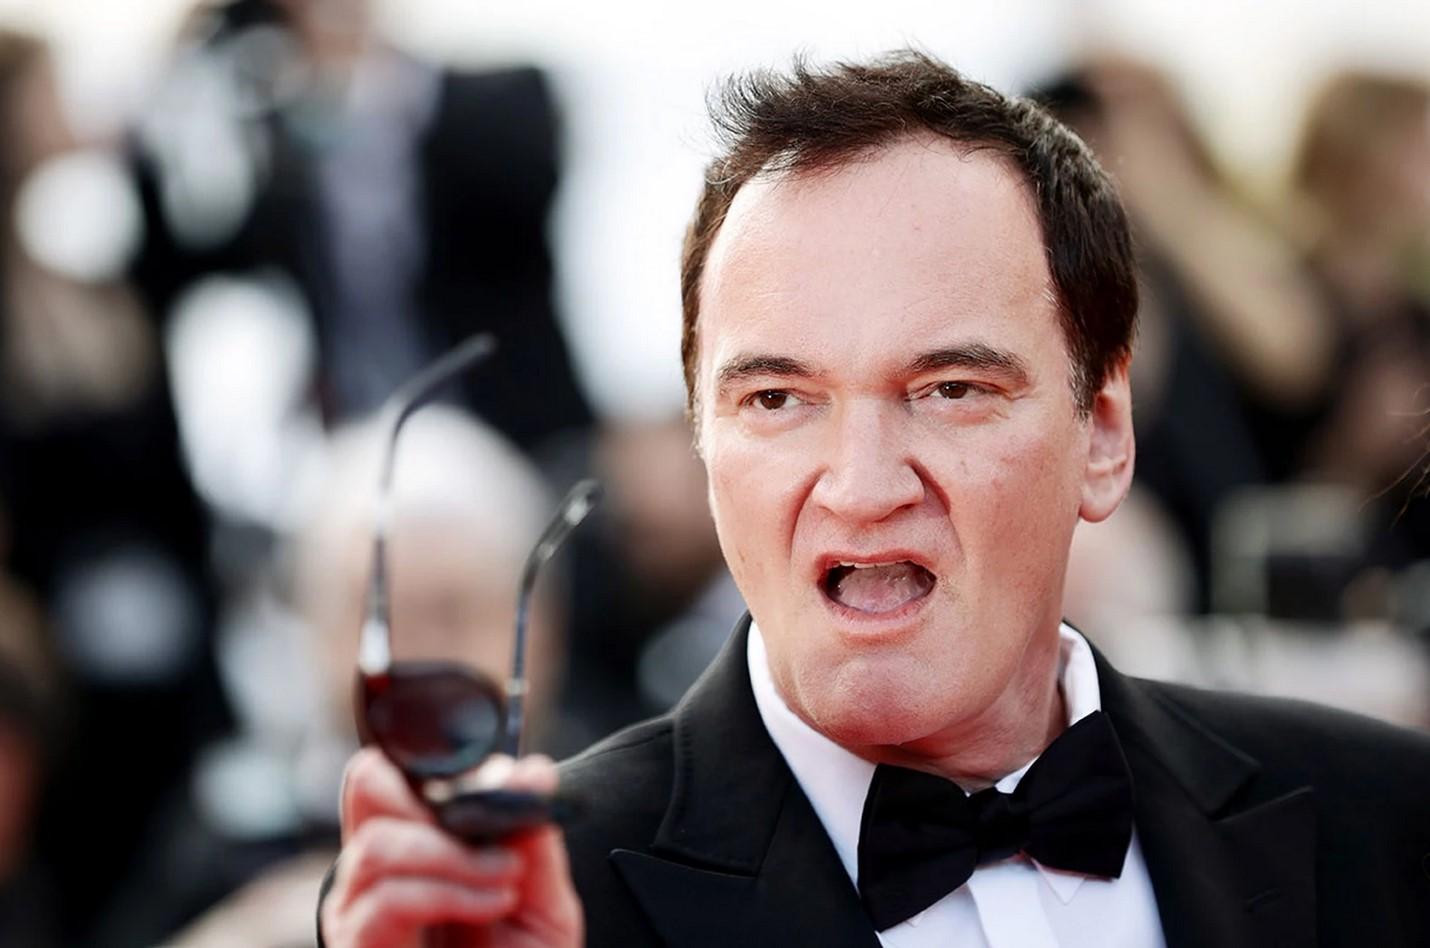 Kventin Tarantino - Avaz